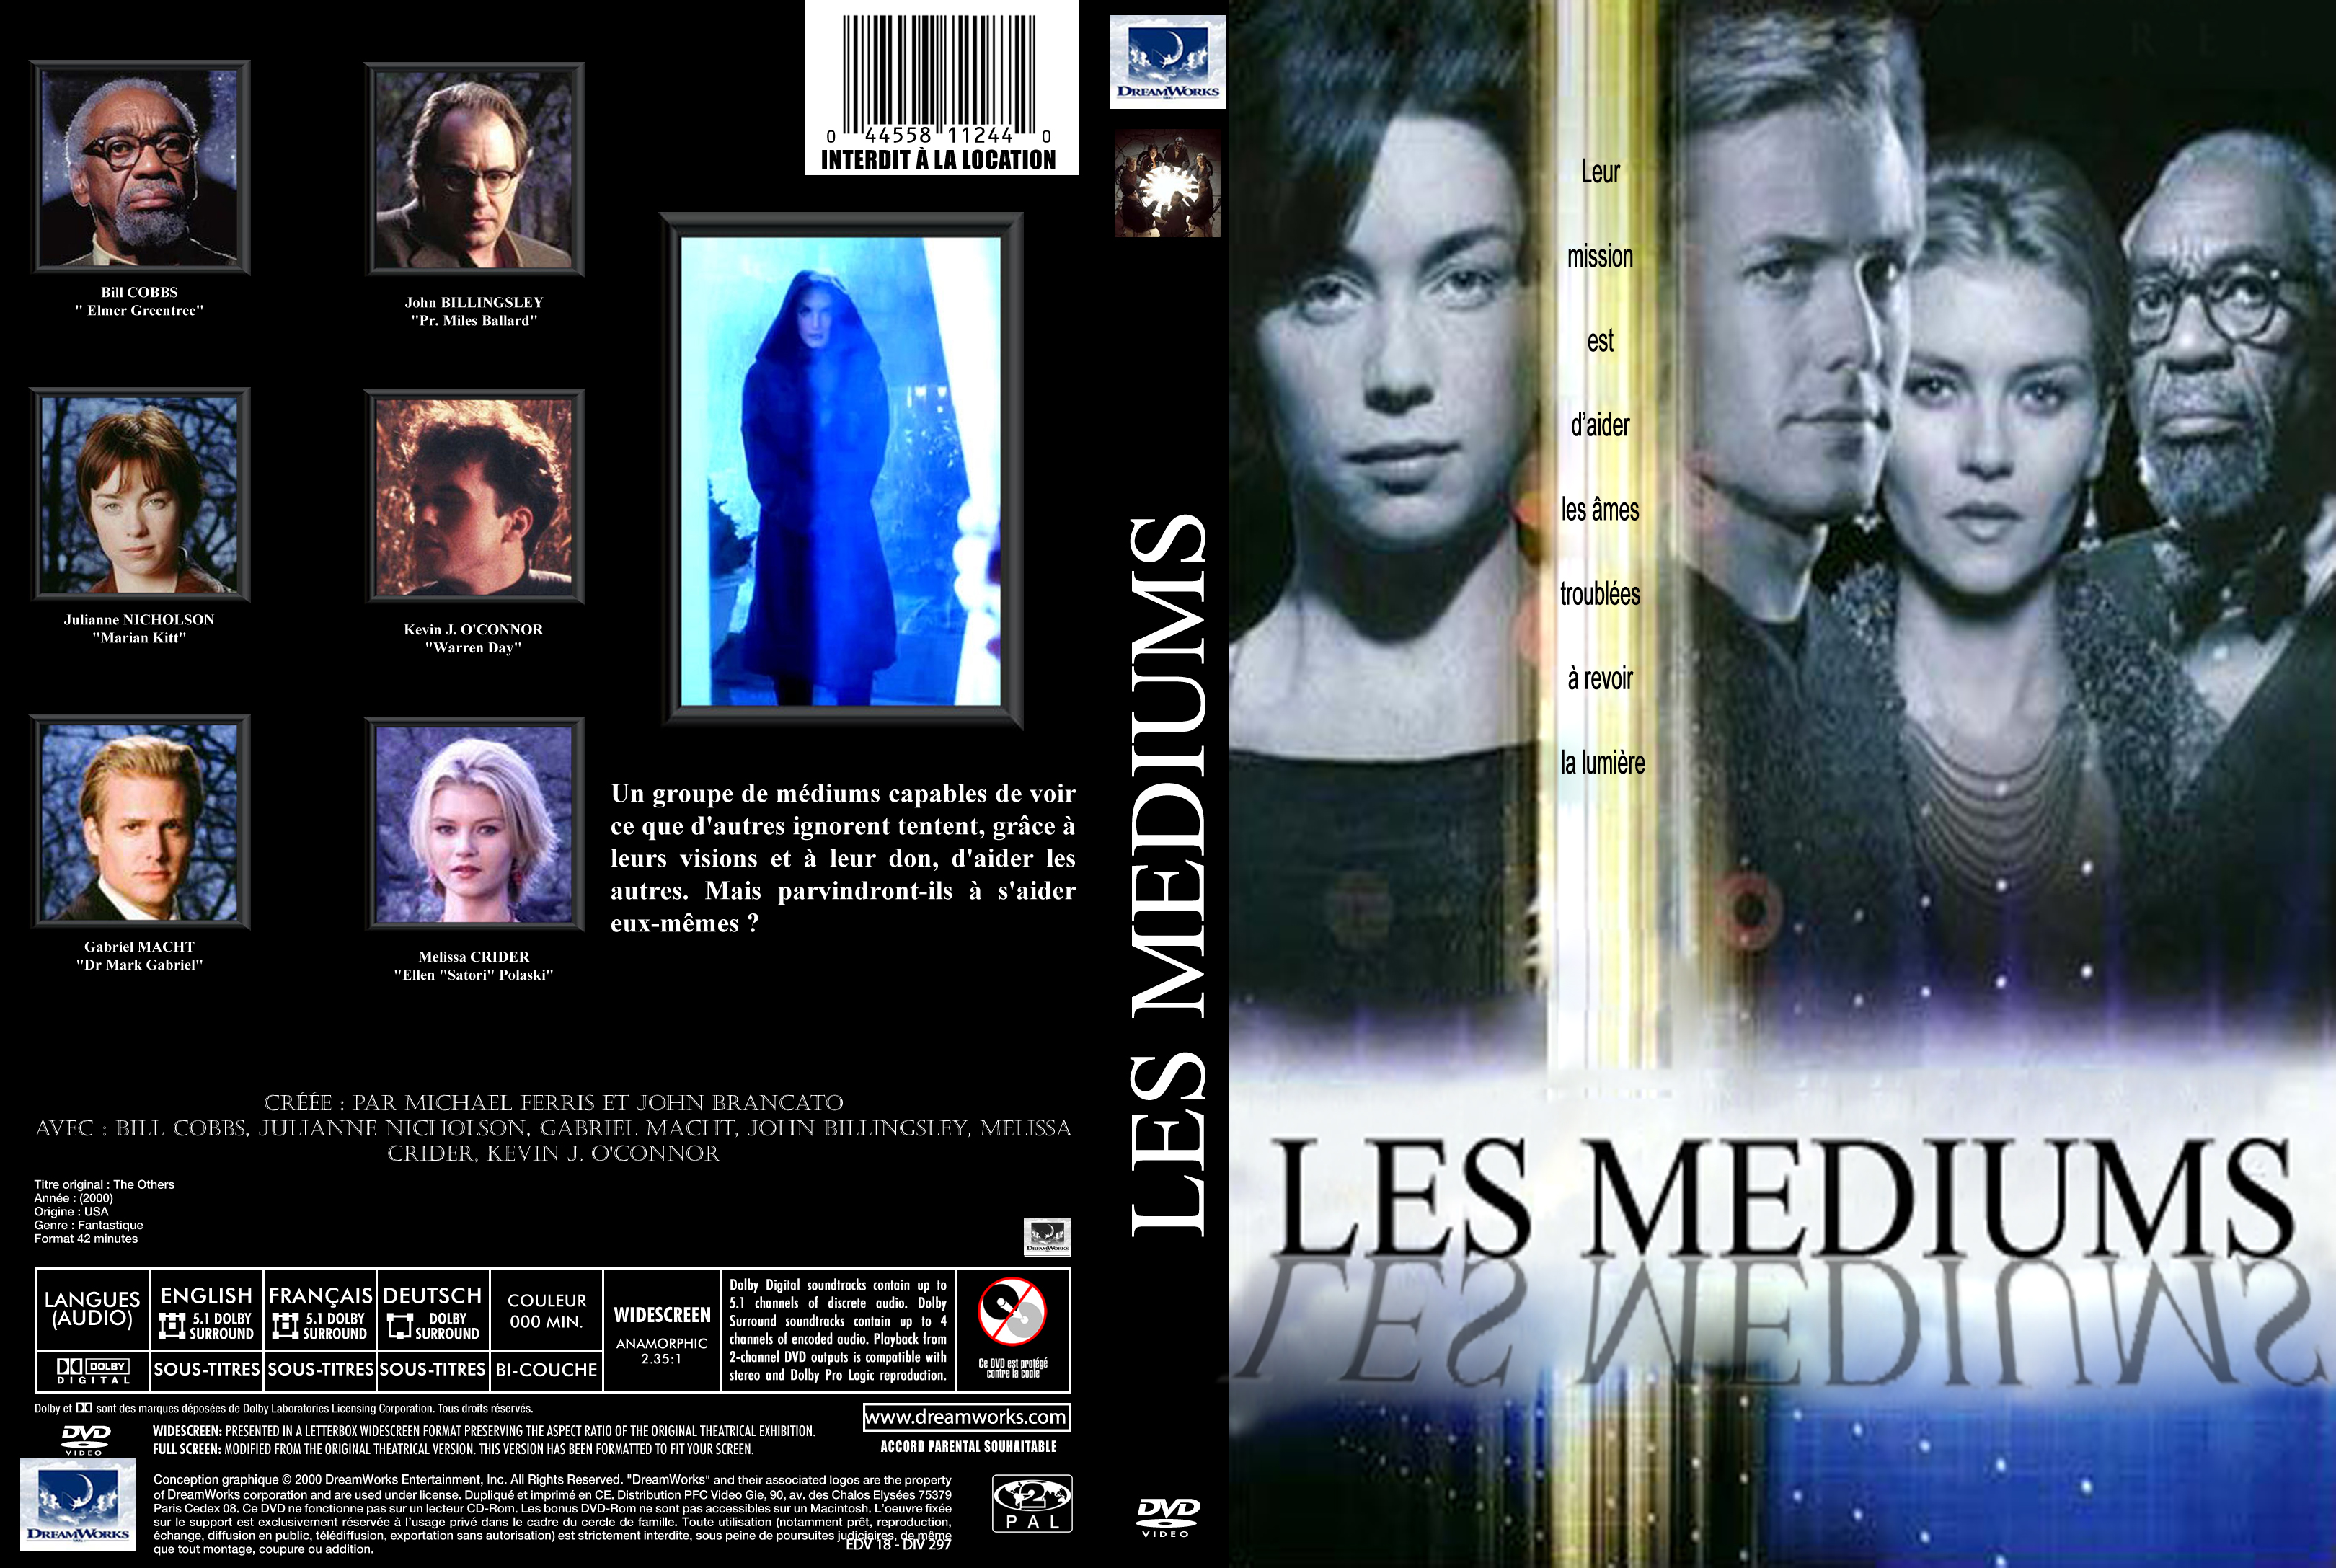 Jaquette DVD Les mdiums custom